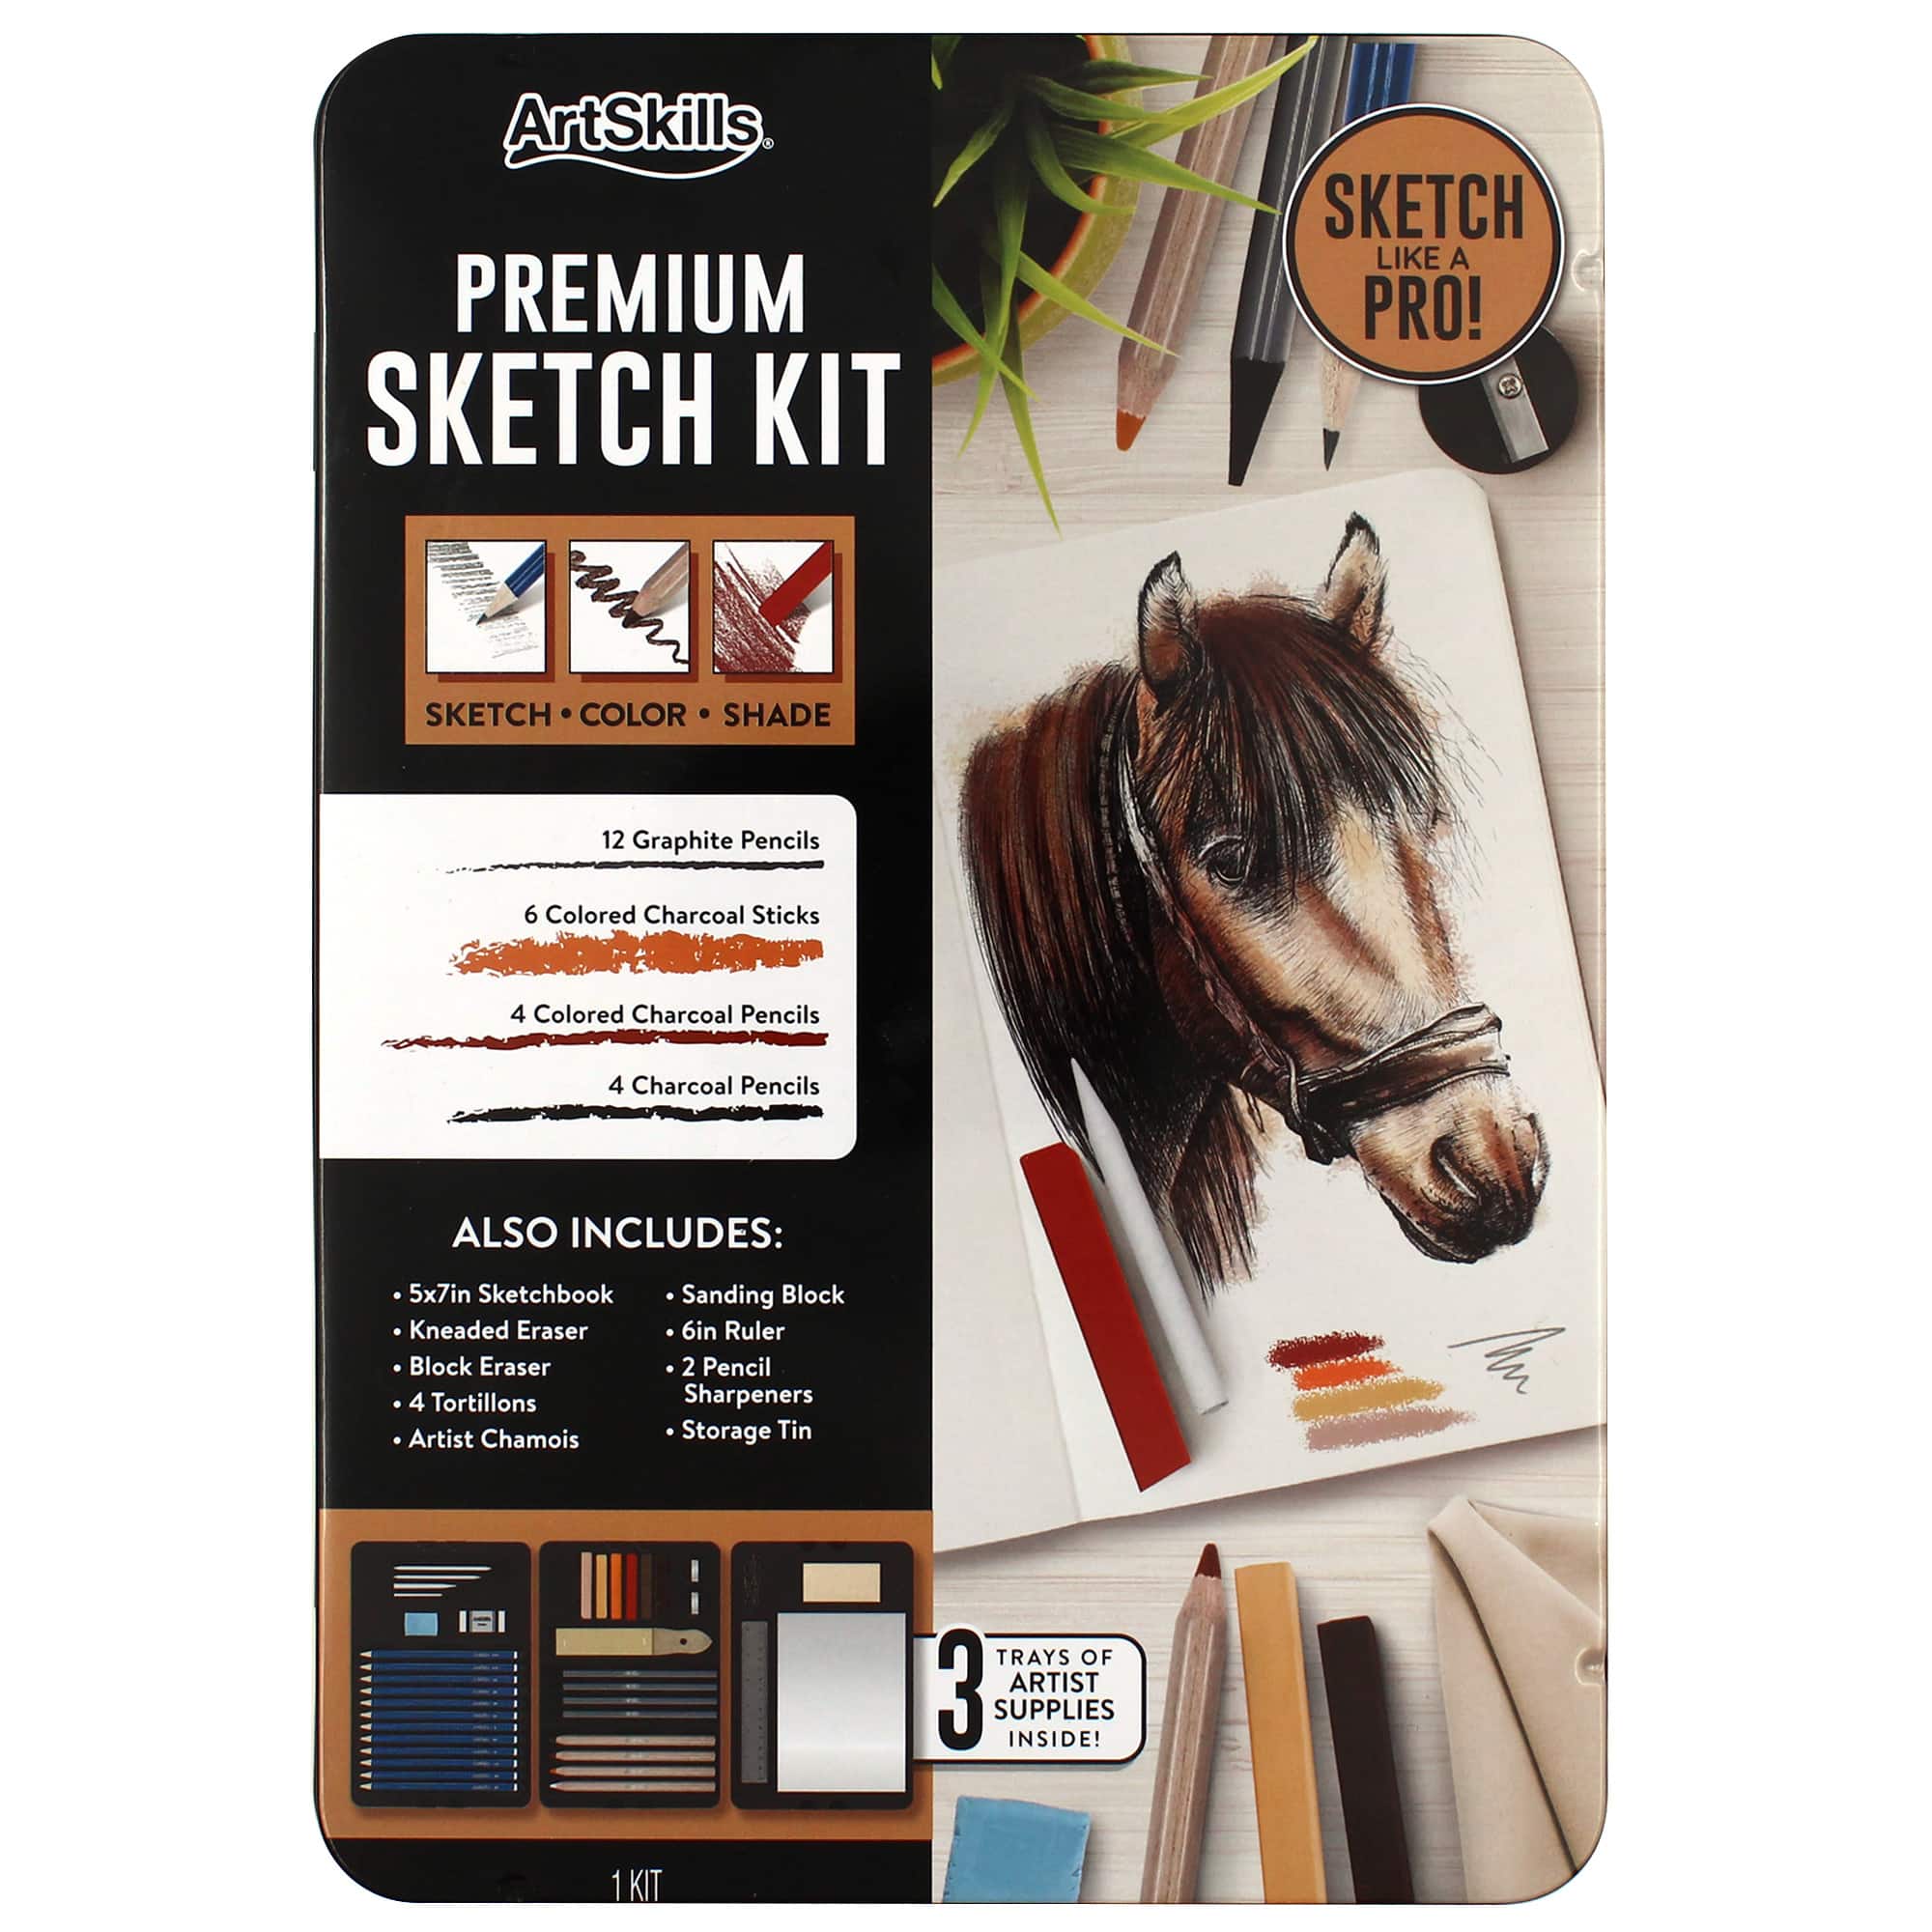 Premium Photo  Multi-colored graphite pencils for drawing and pencil  sharpener